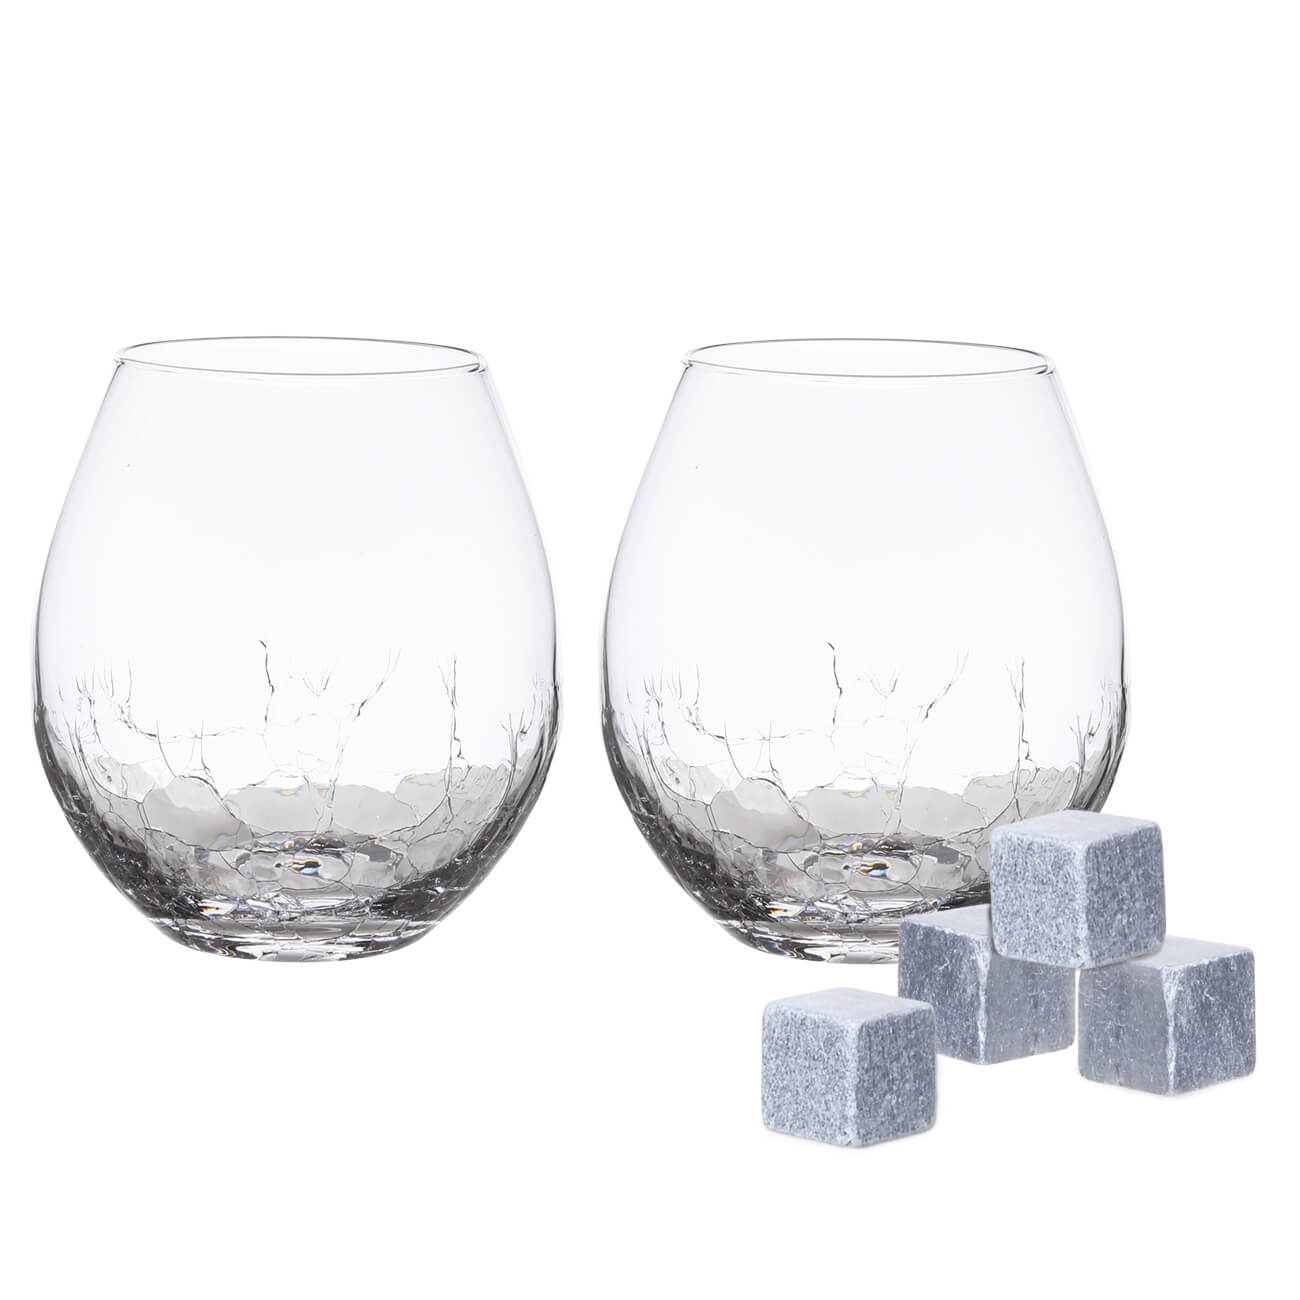 Набор для виски, 2 перс, 6 пр, стаканы/кубики, стекло/стеатит, Кракелюр, Ice